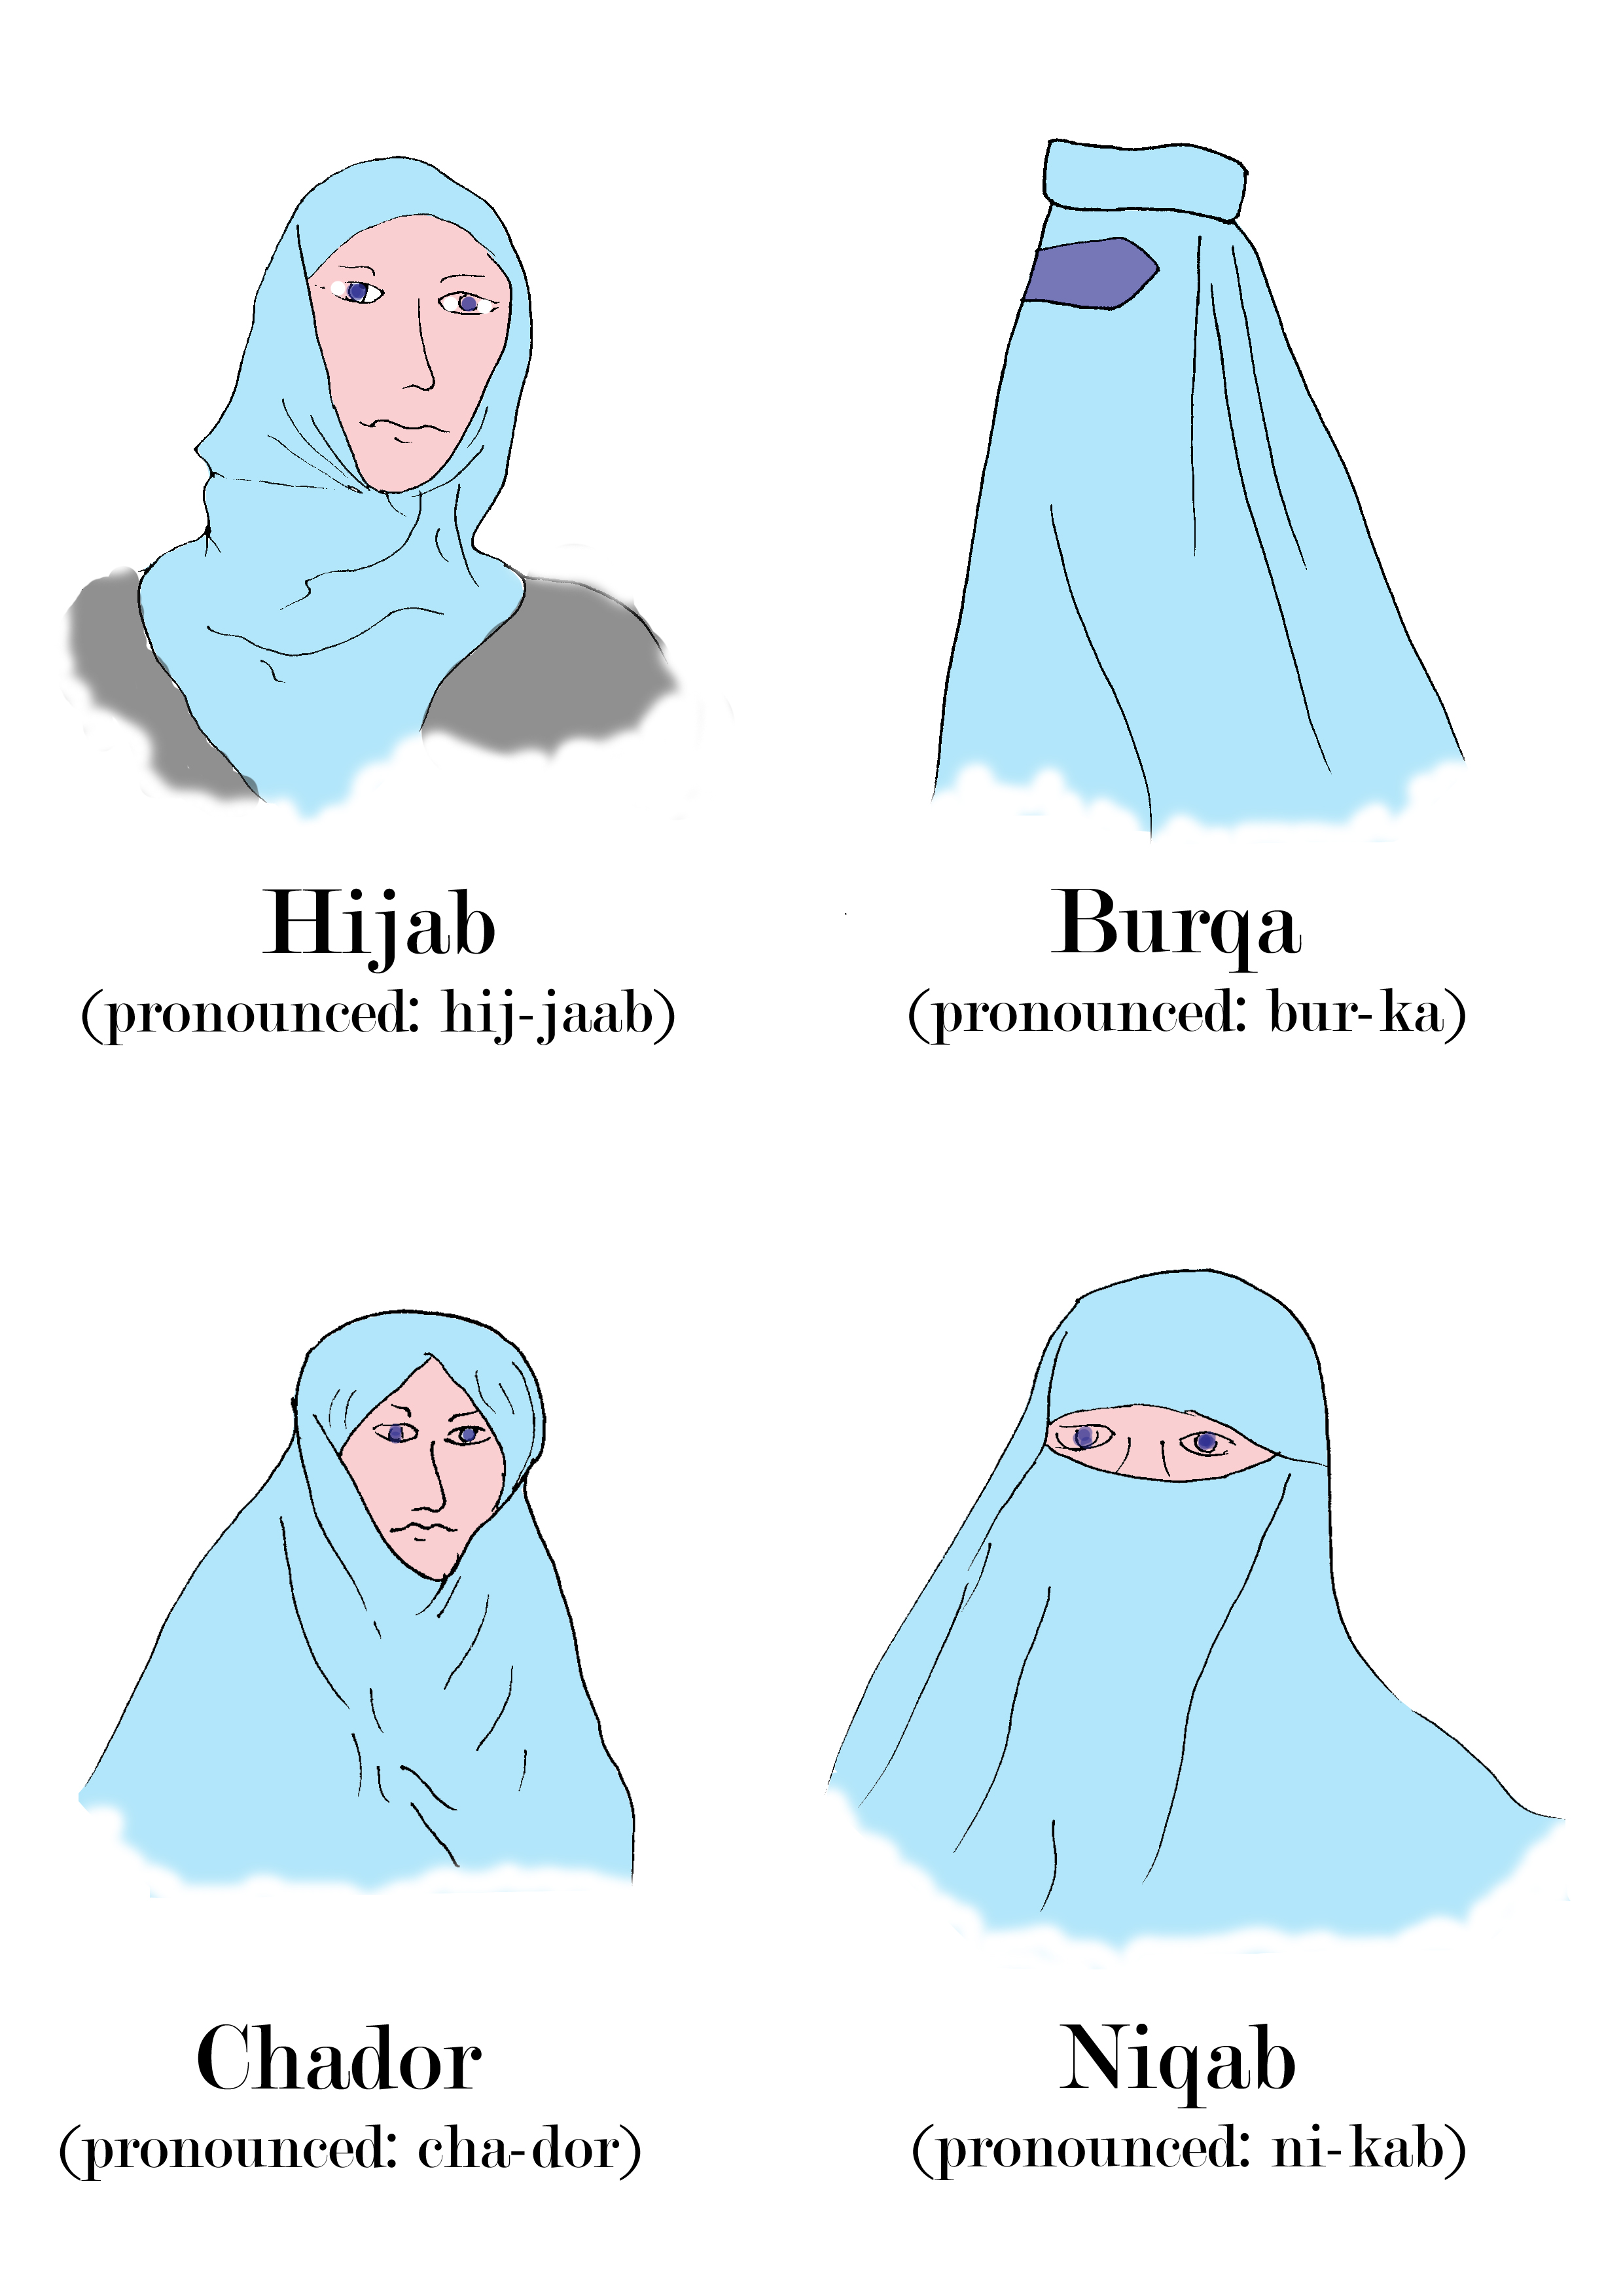 Burqa Ban 'Xenophobic'  equal rights: get it right